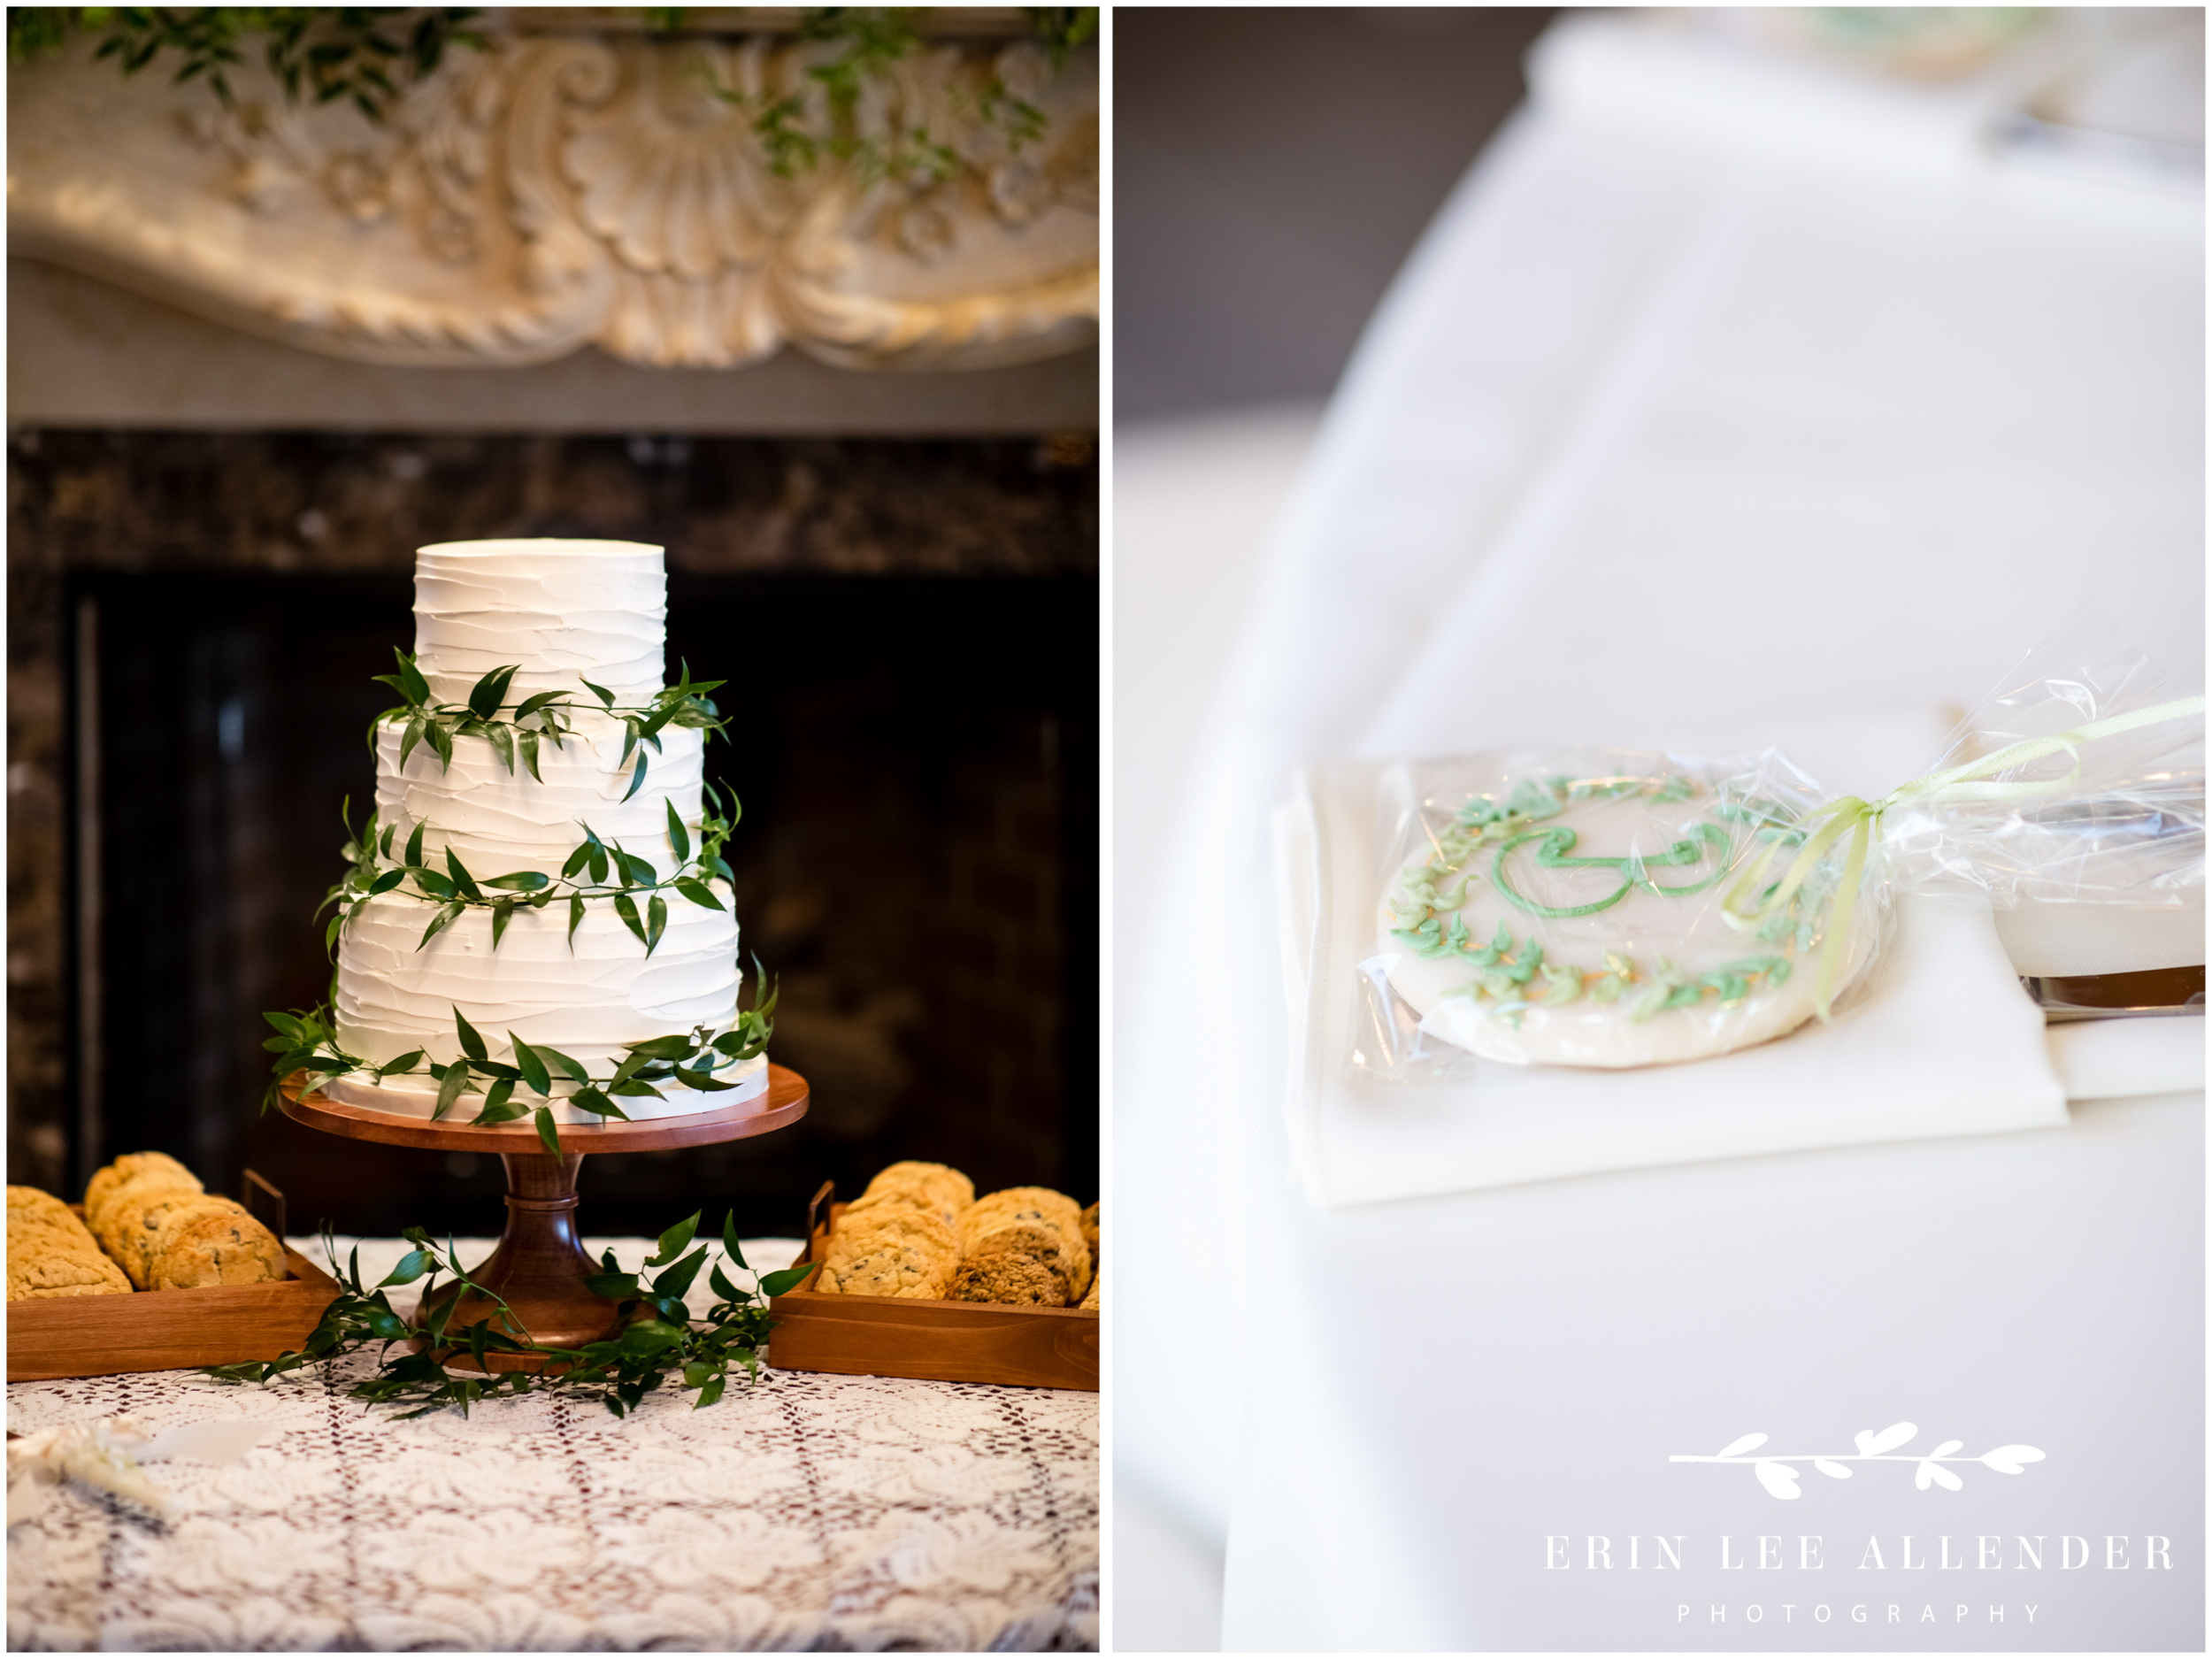 wedding-cake-with-greenery